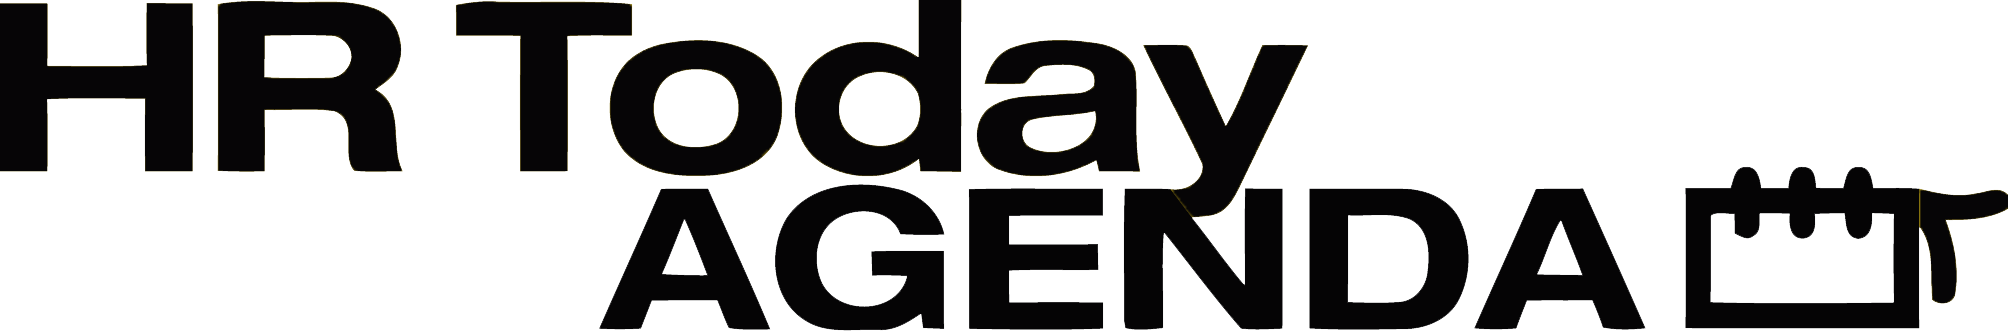 Logo-Agenda